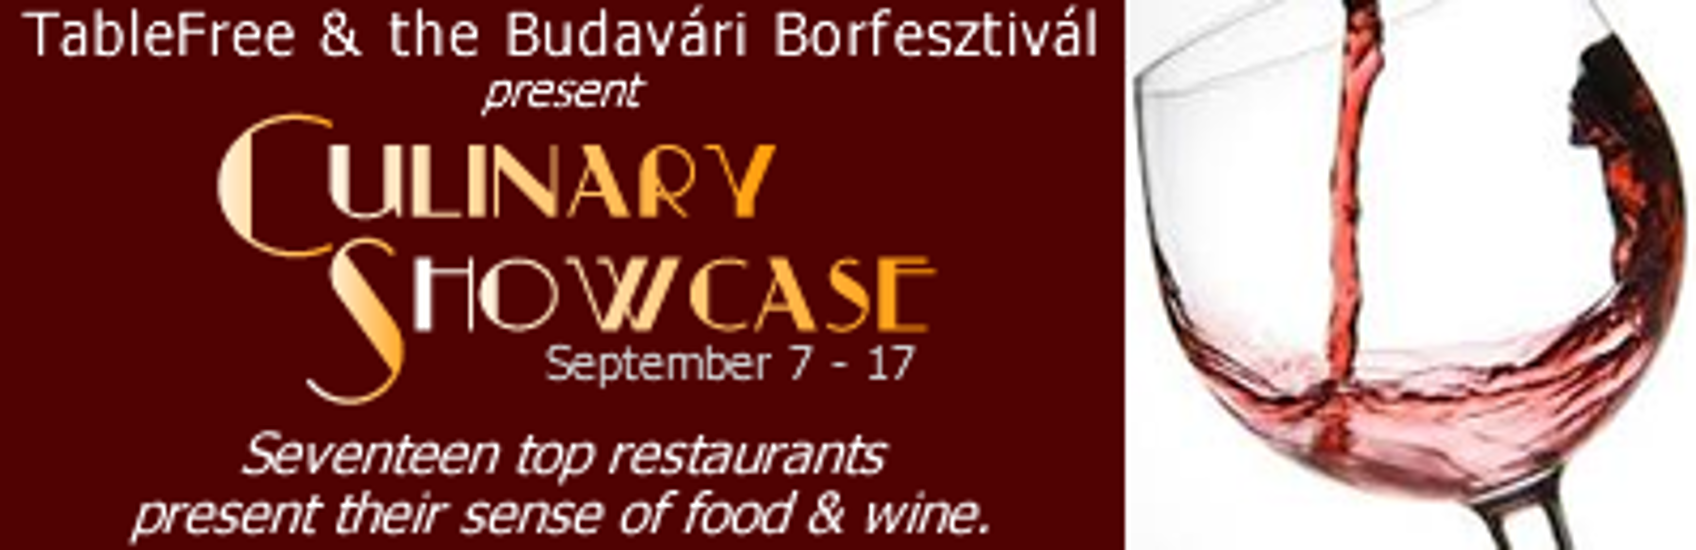 Special Budapest Wine Festival Menus From 7-17 September